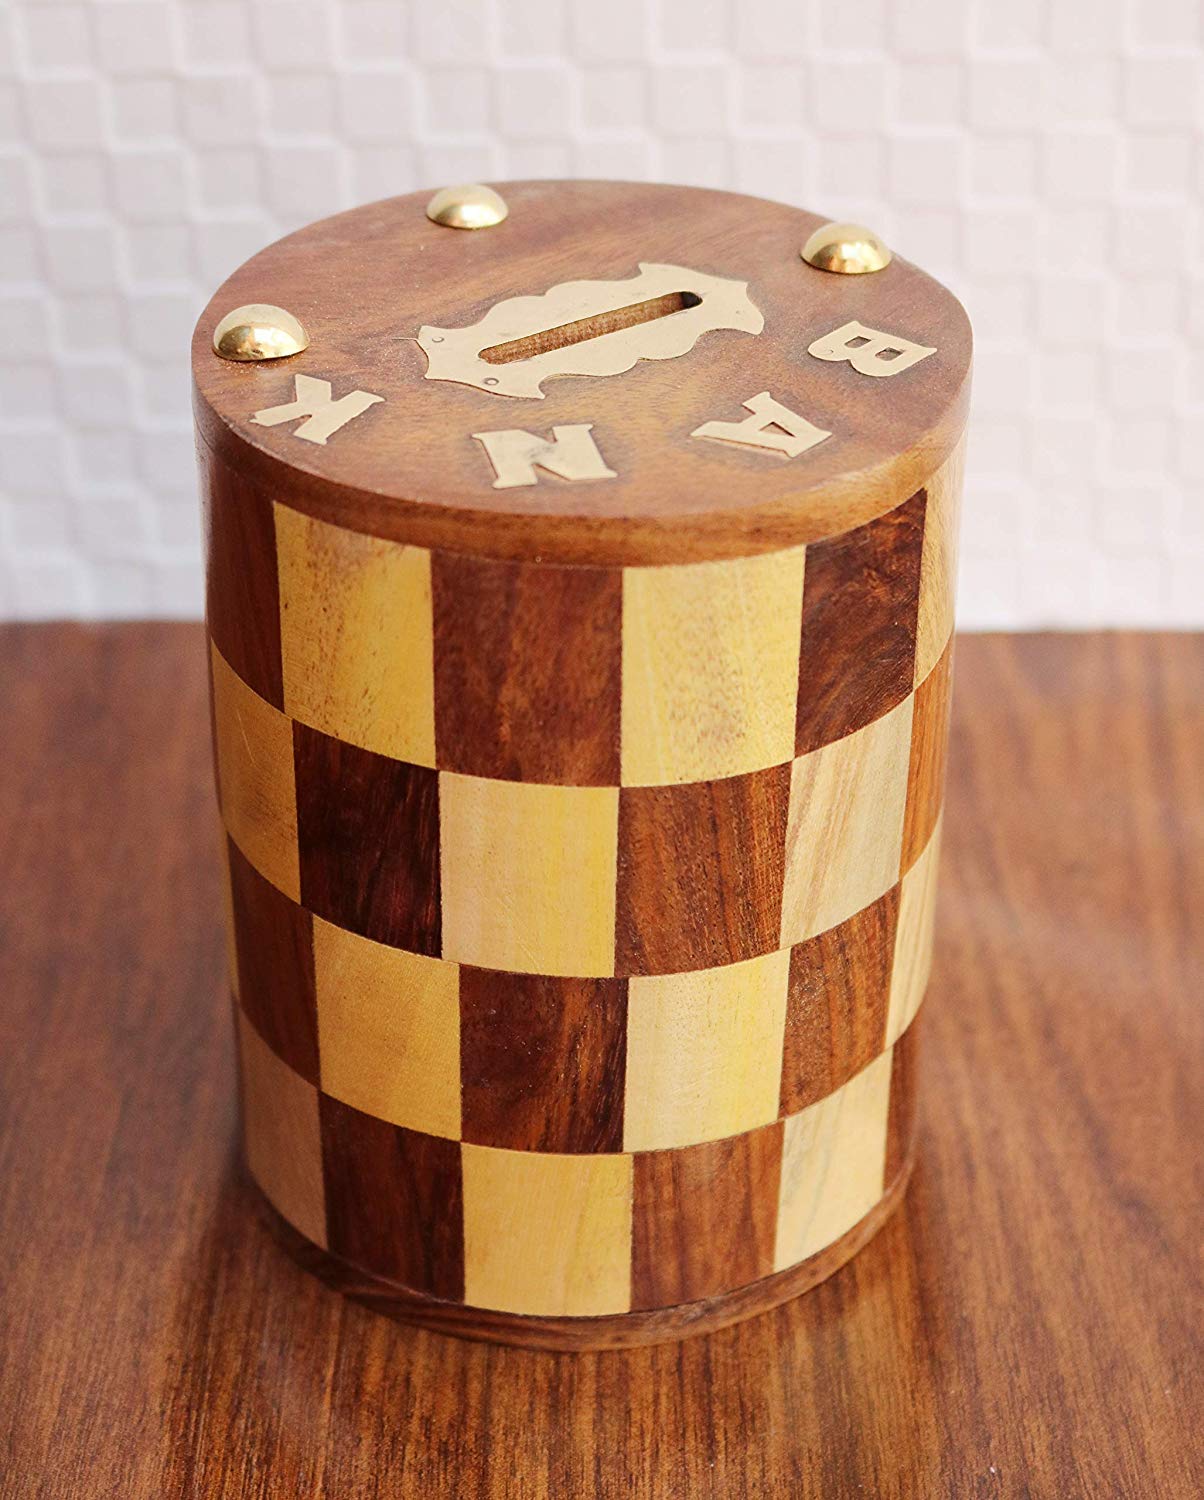 Wooden Chess Shaped Money Bank , Piggy Bank Handmade Gullak Coin Storage Organizer for Kids & Adults Dime Store